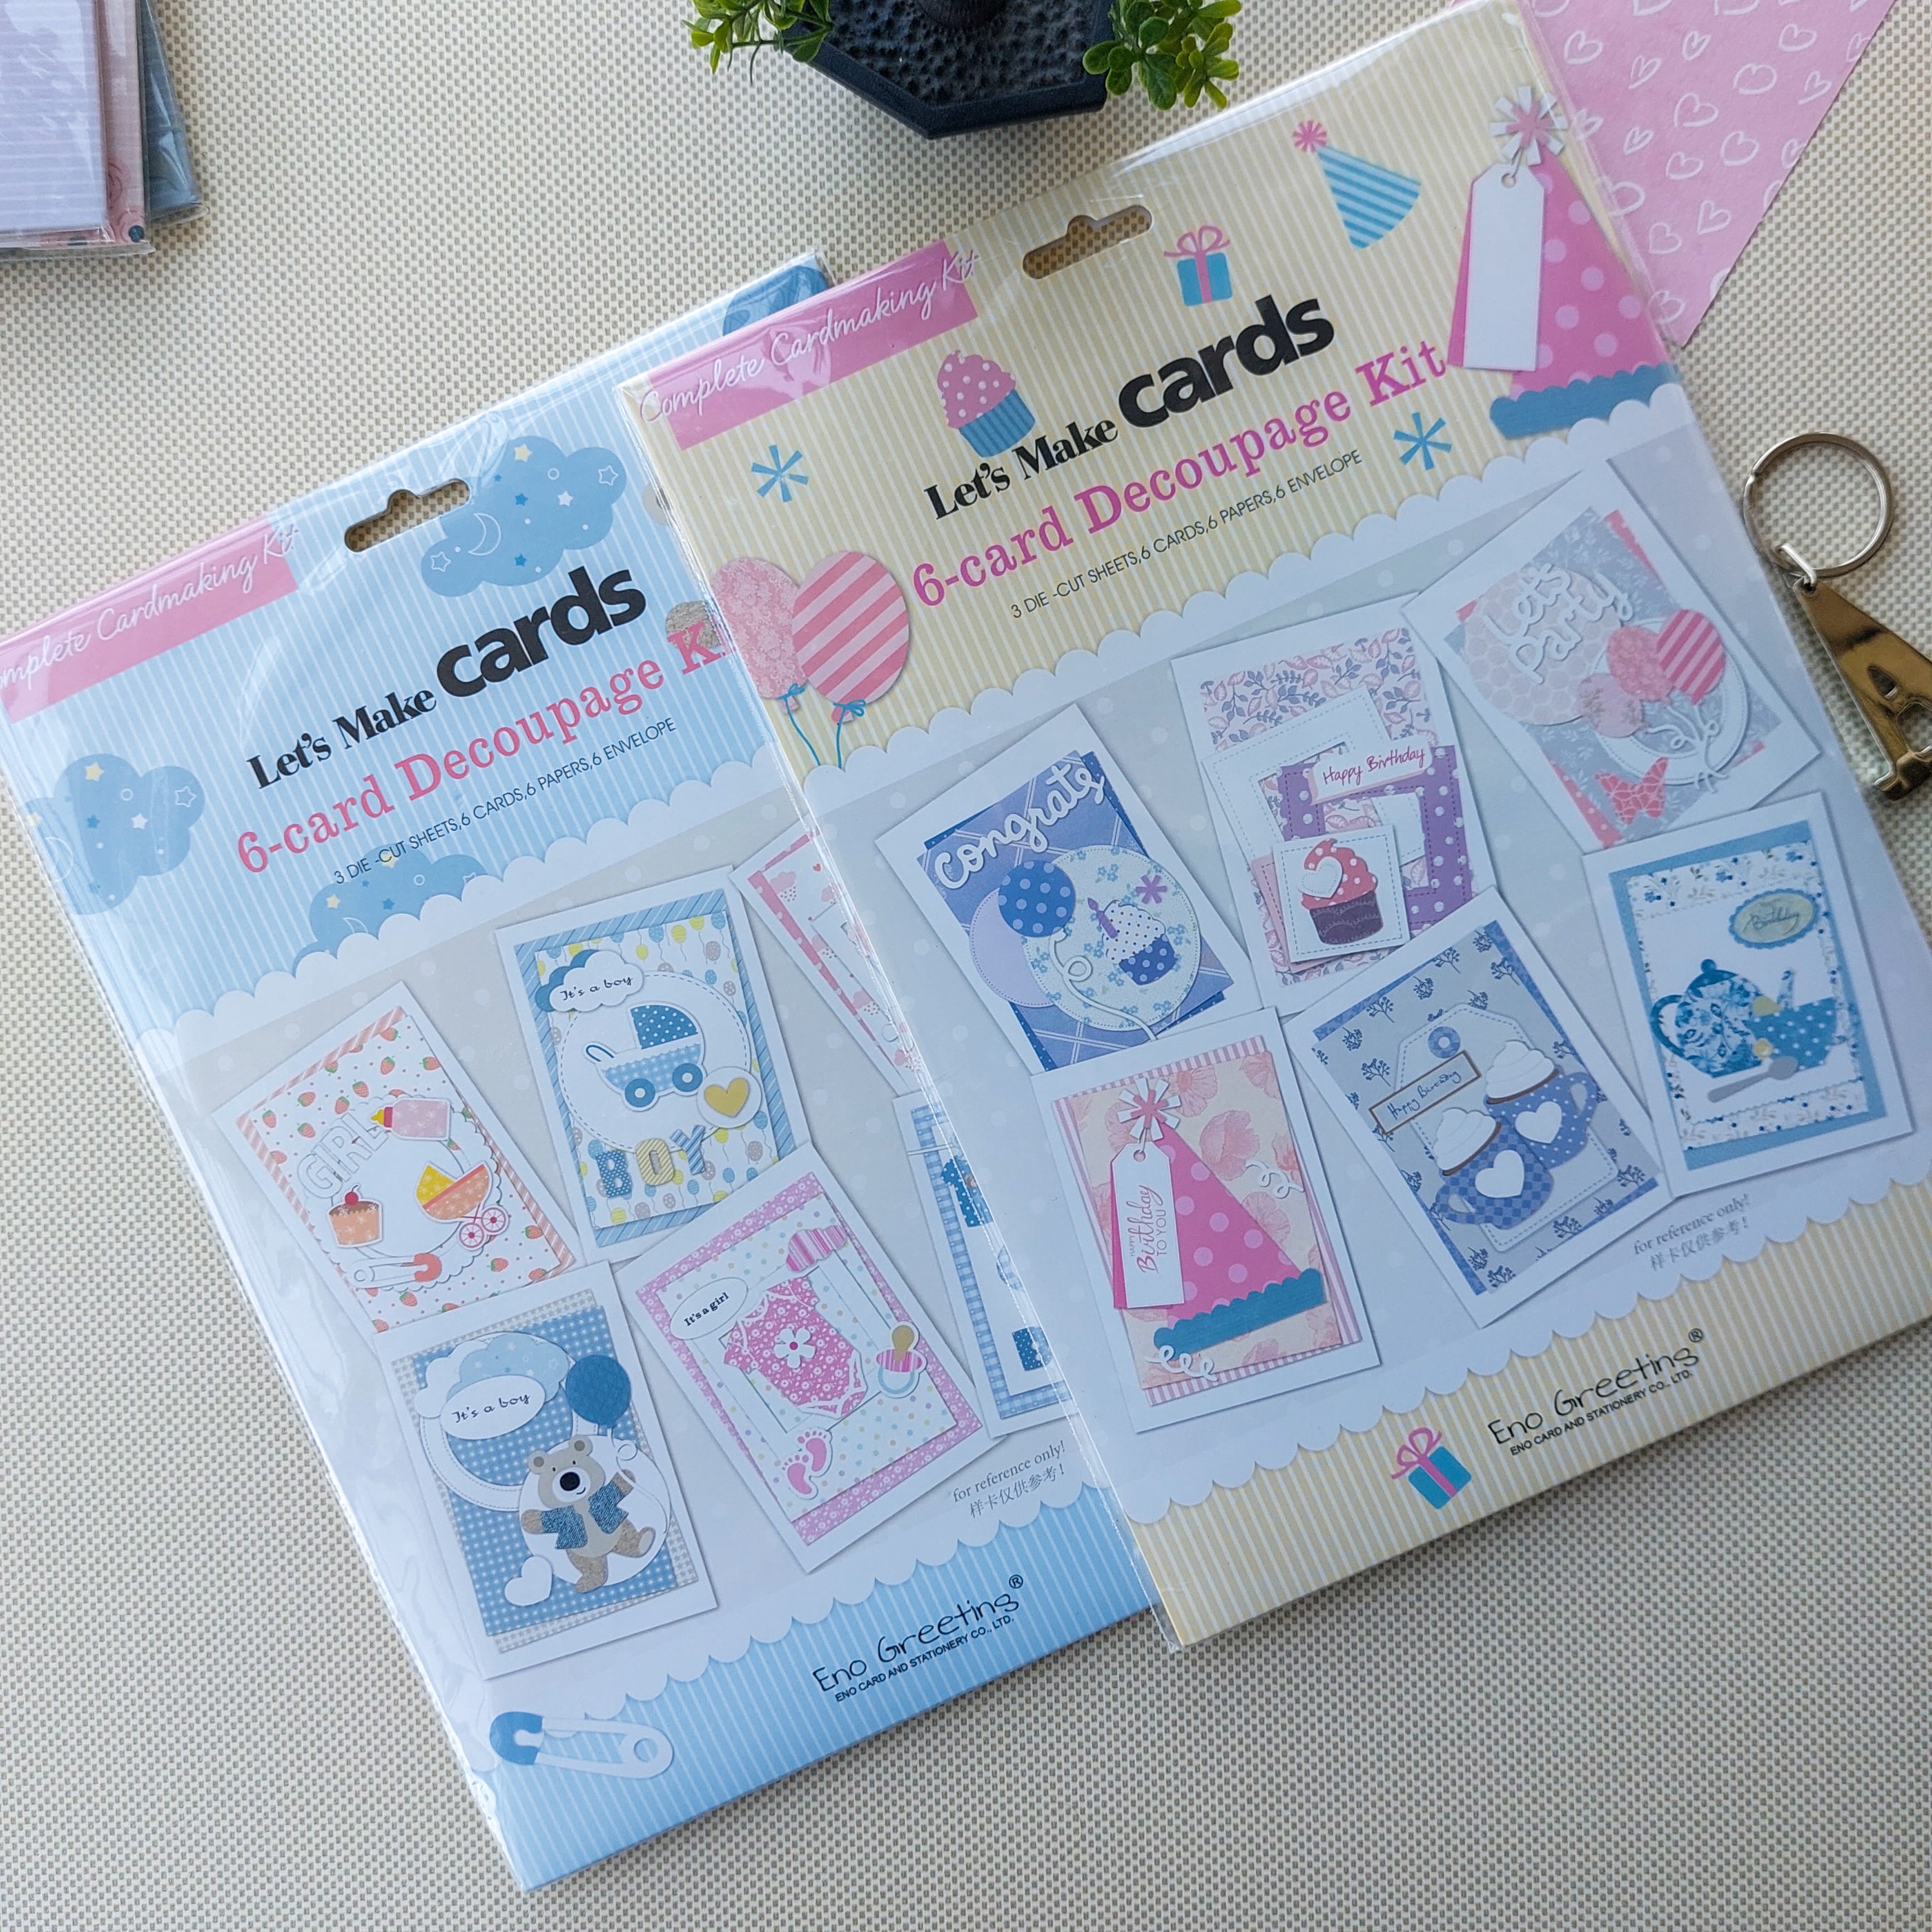 Card Making Kits Decoupage